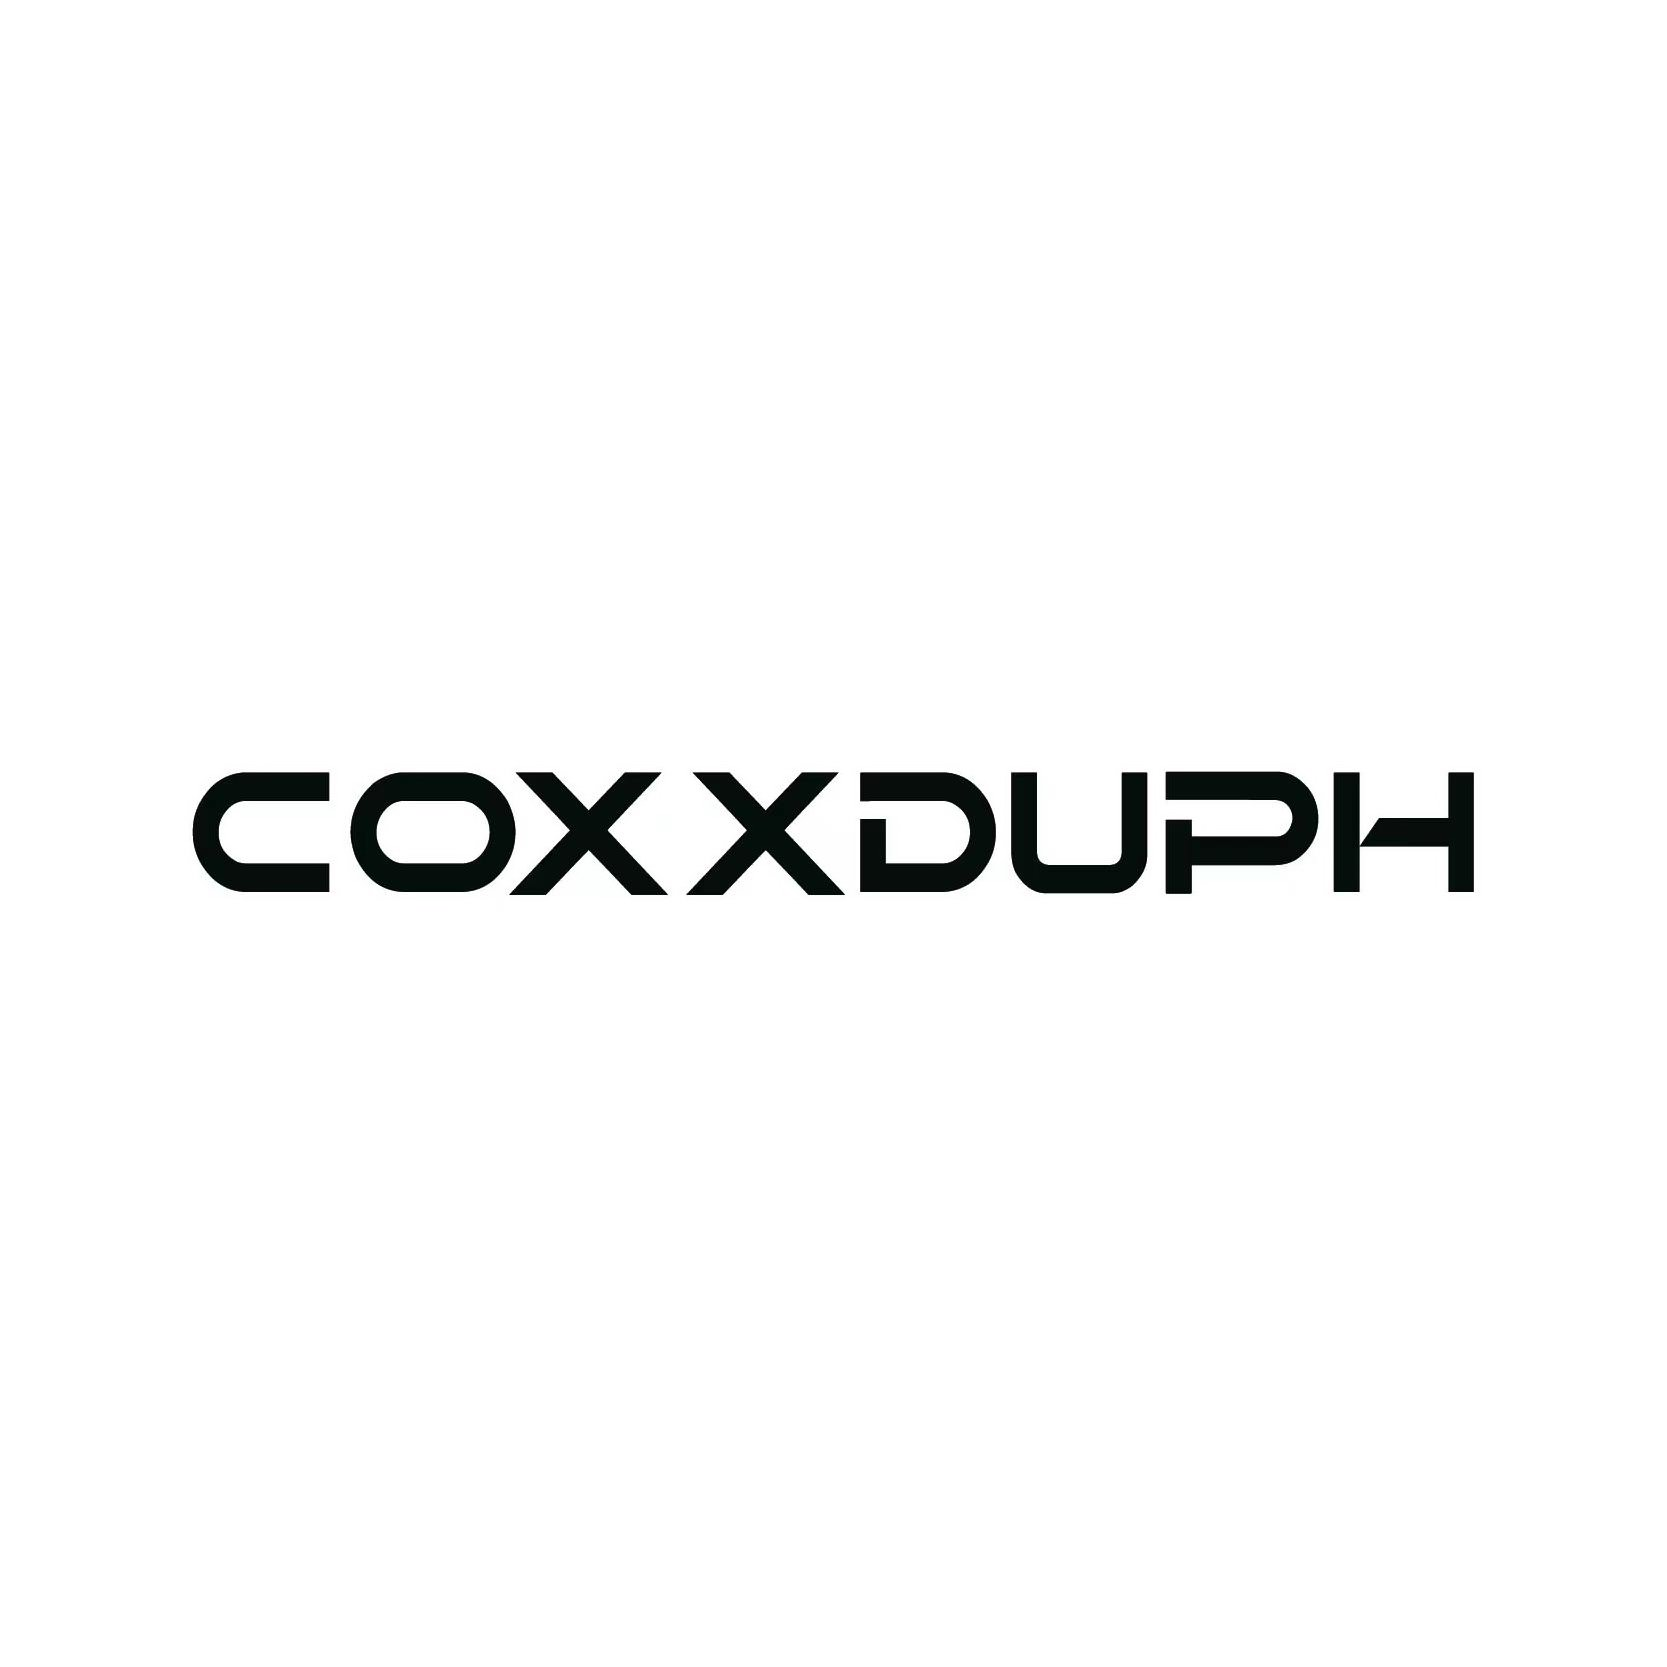  COXXDUPH